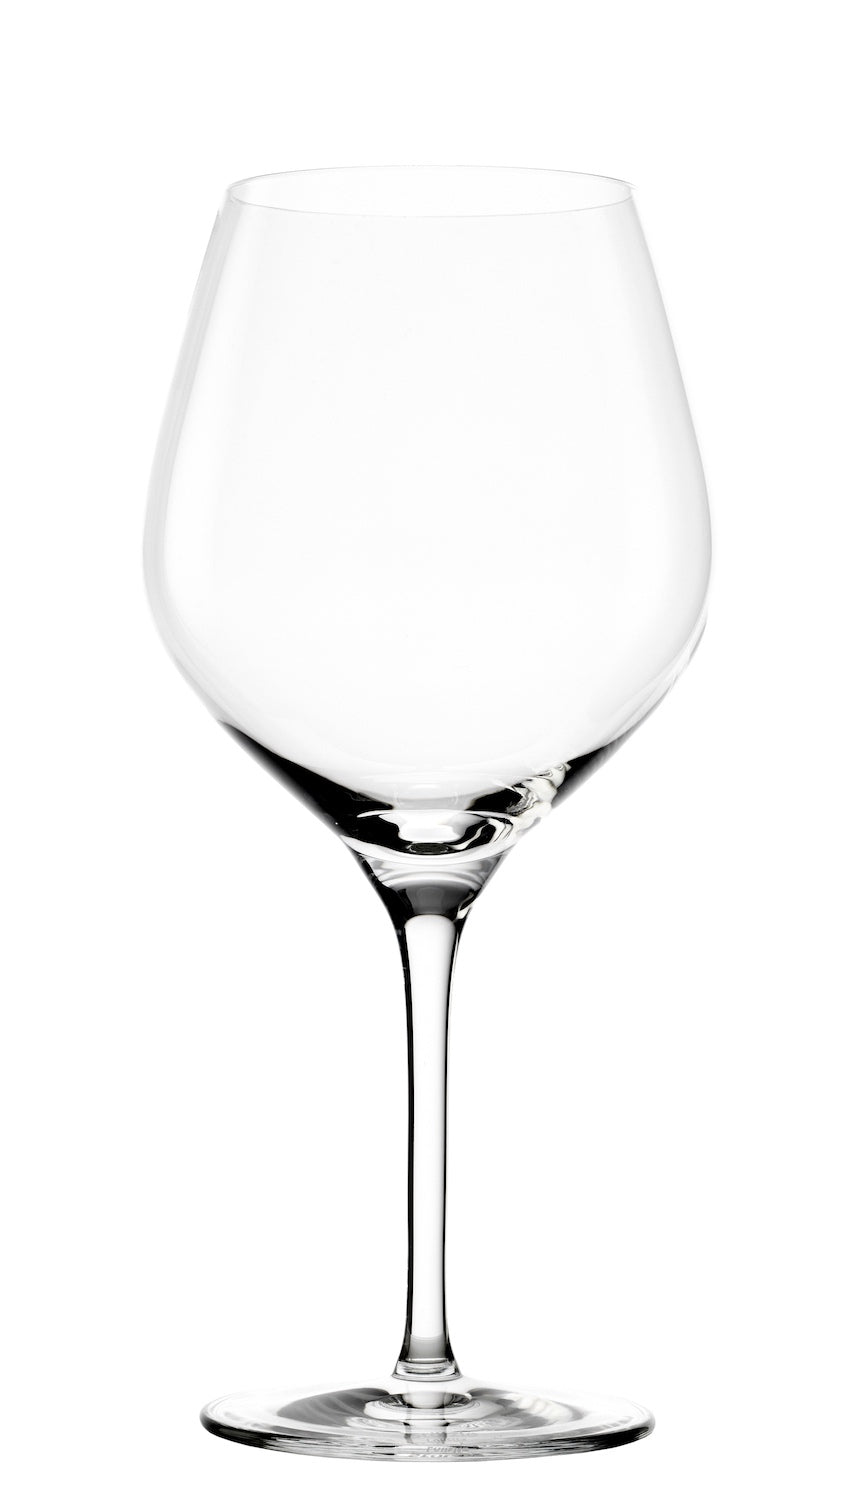 Stolzle 1490002T Exquisit Royal 12 oz. White Wine Glass - 6/Pack